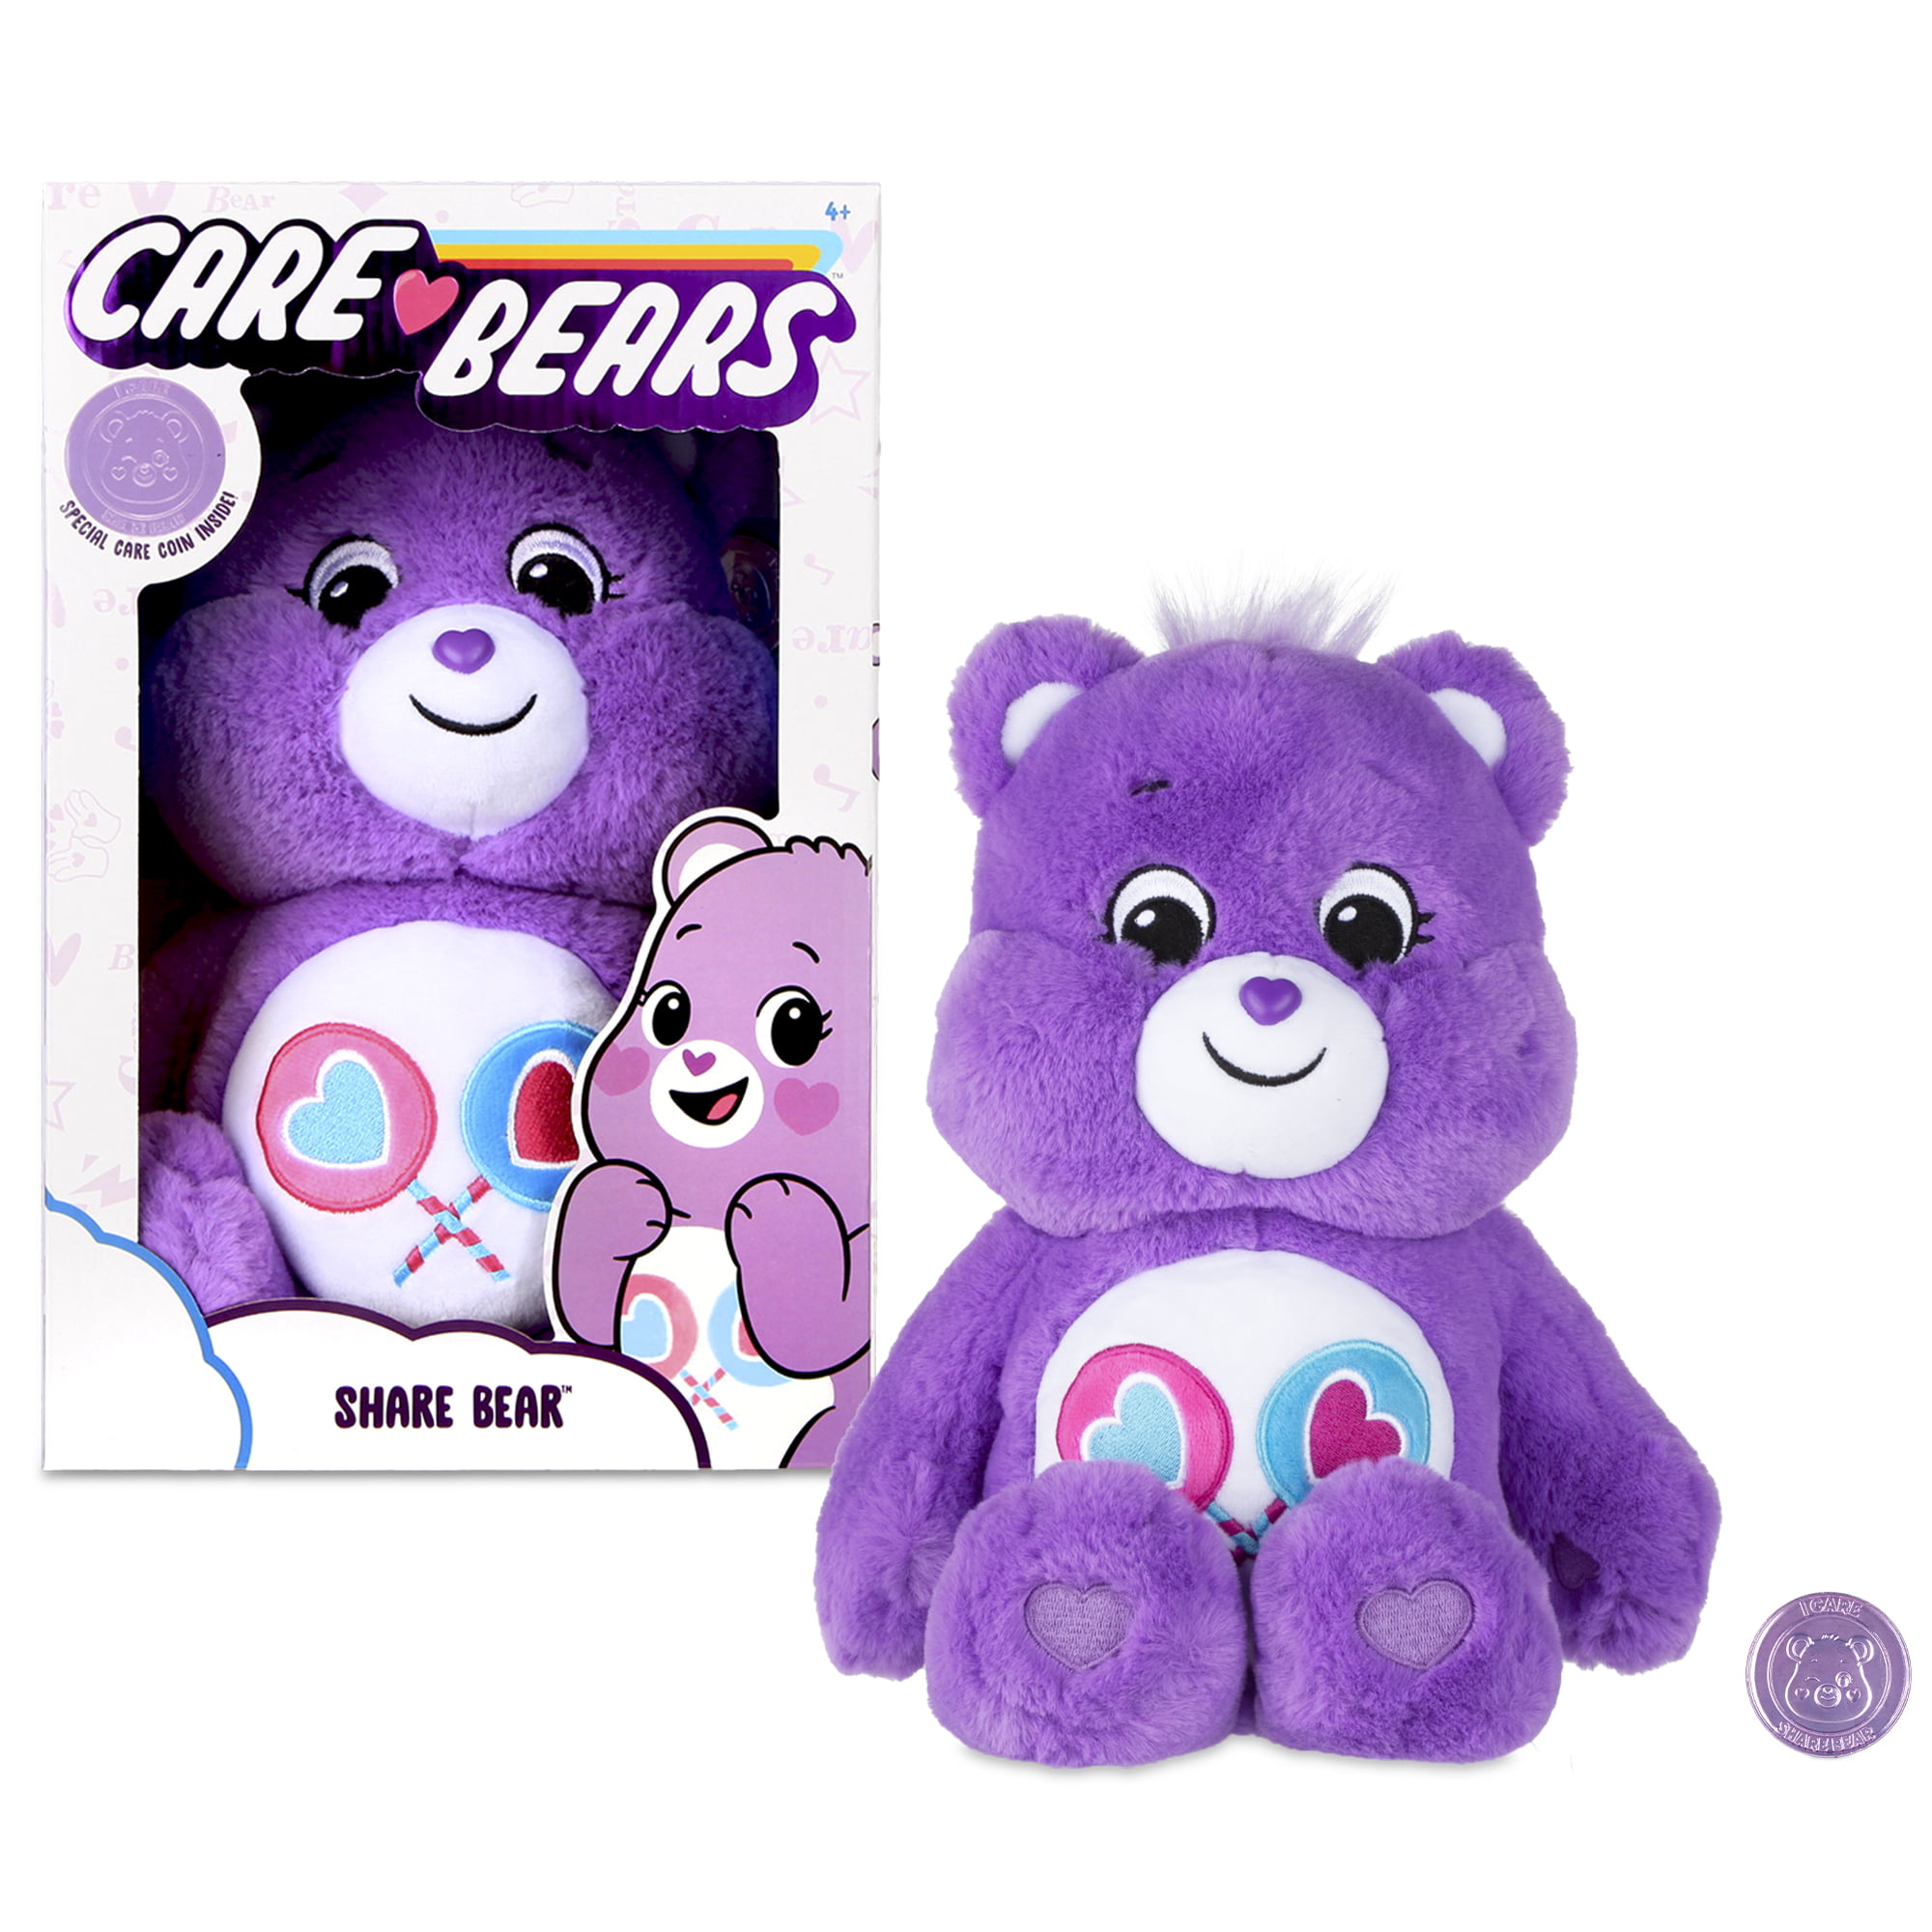 where to buy care bears